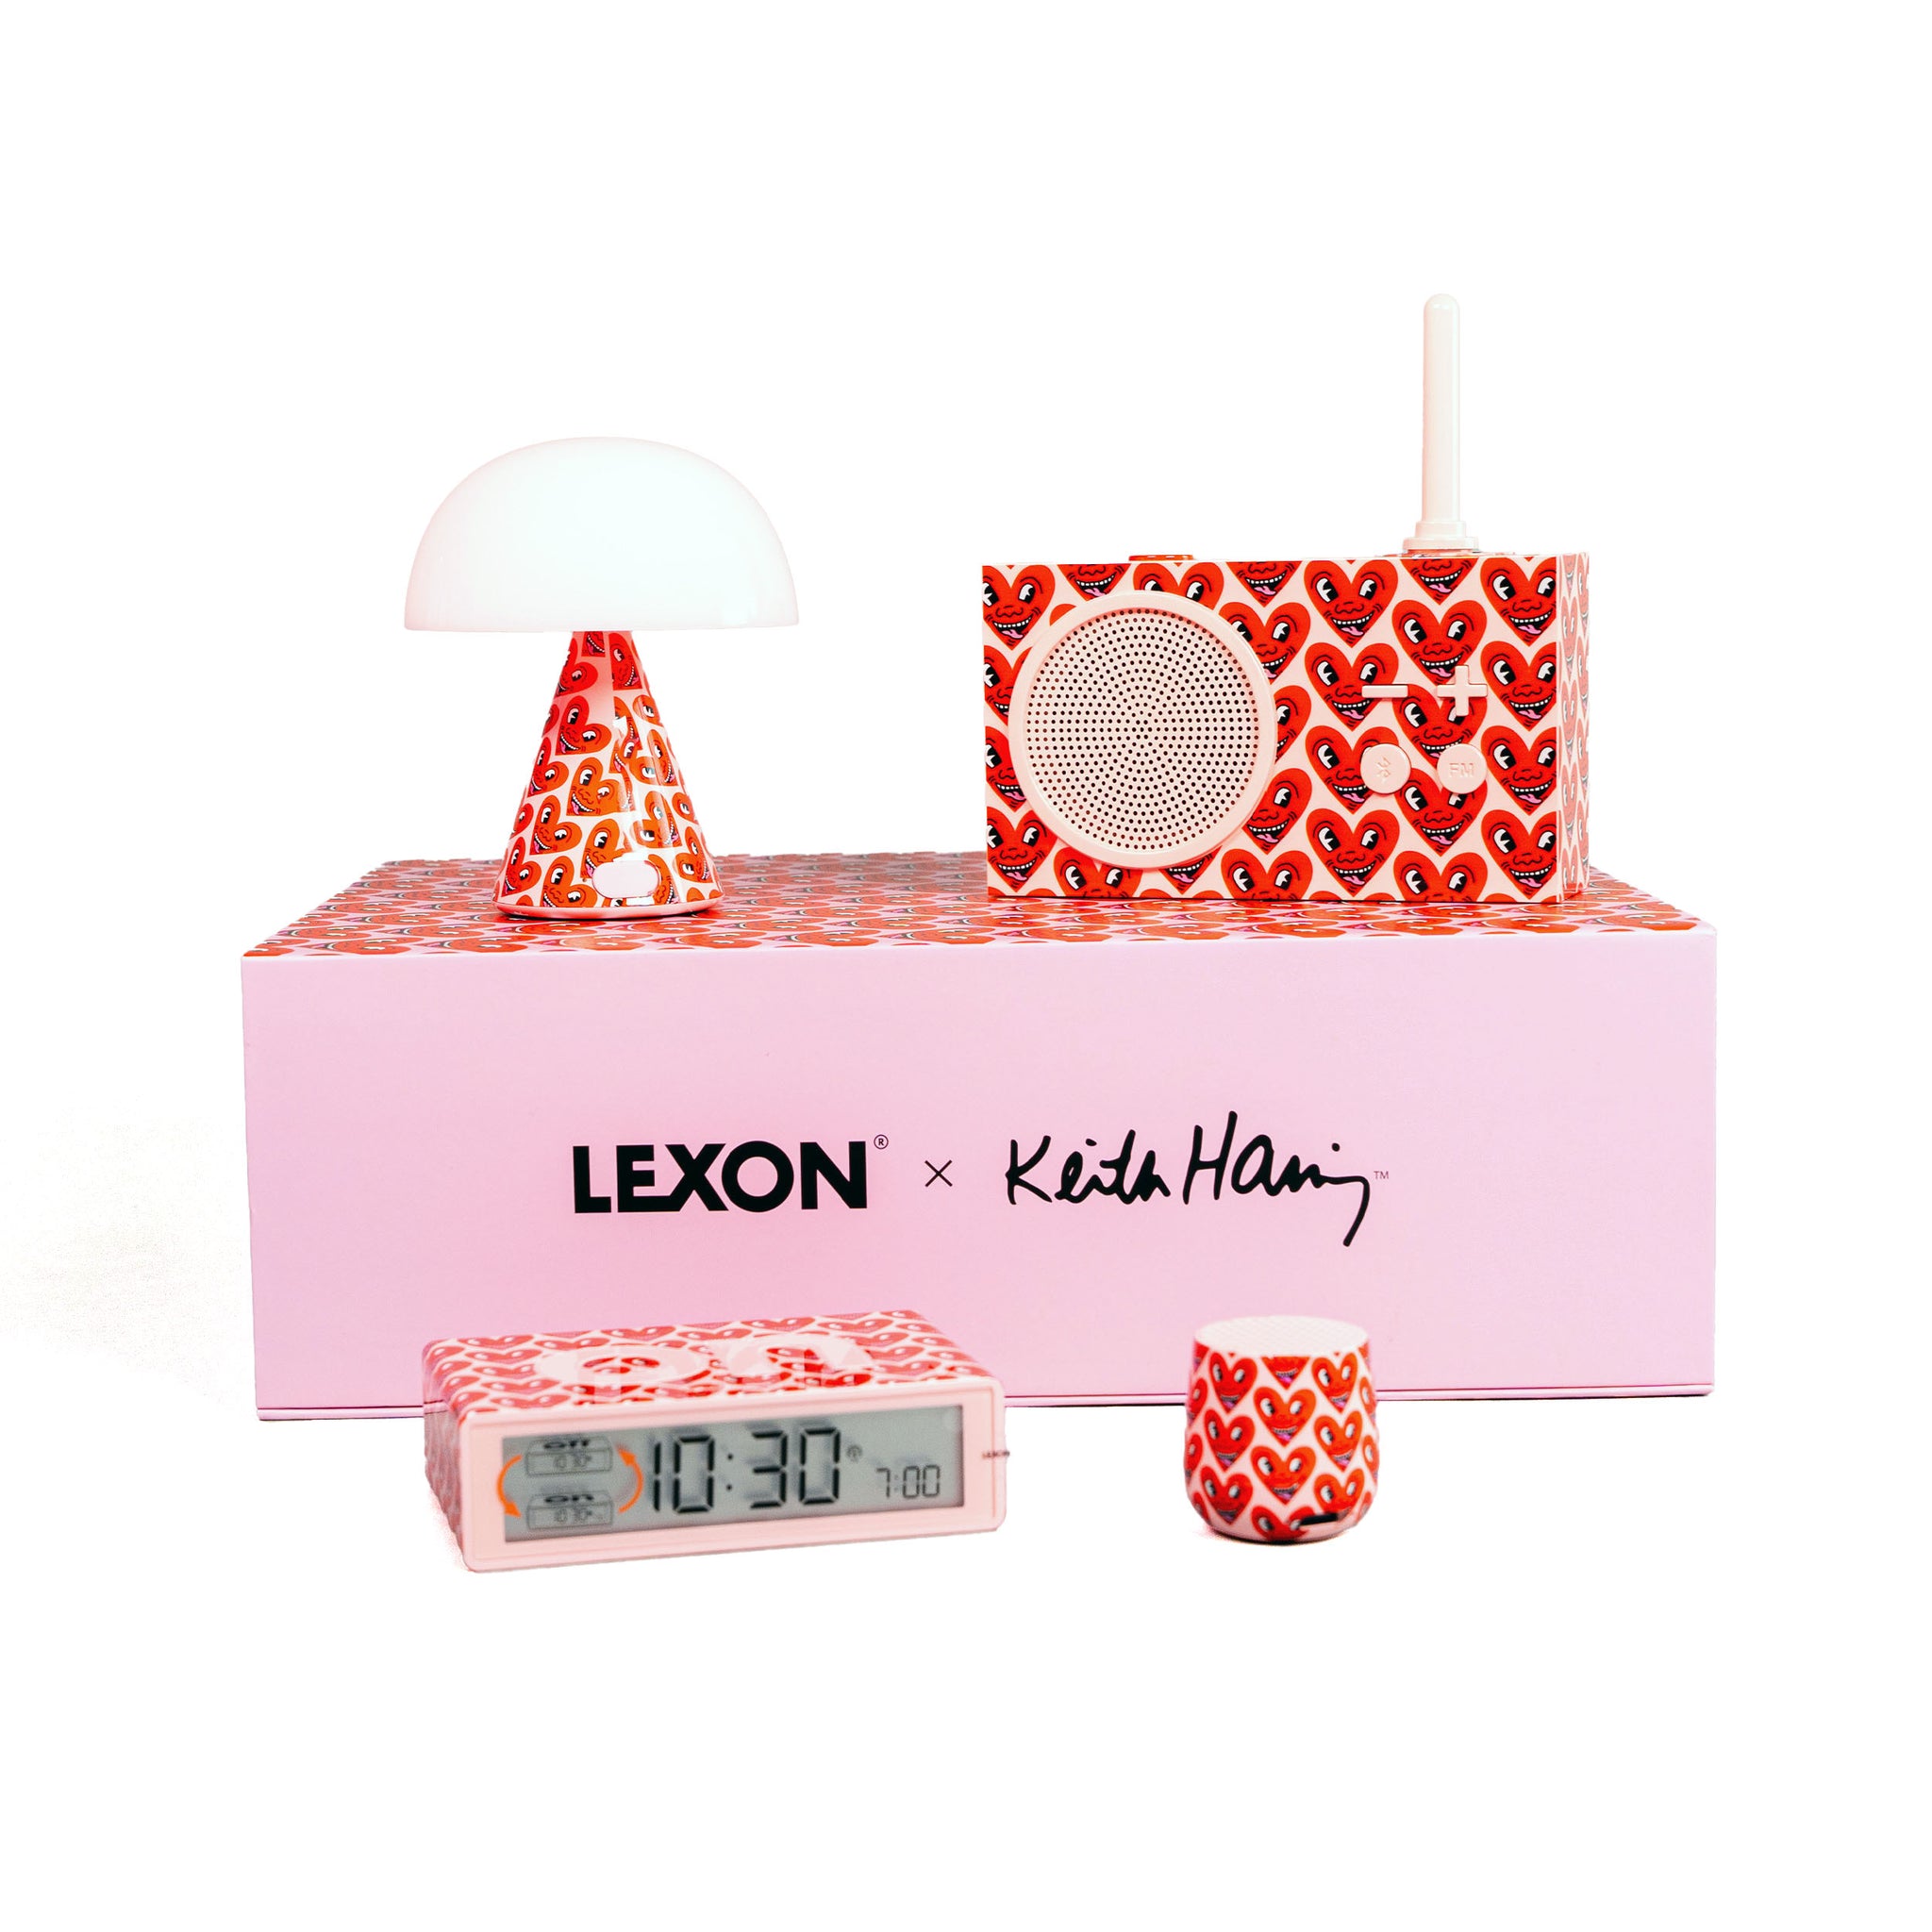 Gift set - Lexon x Keith Haring - Heart